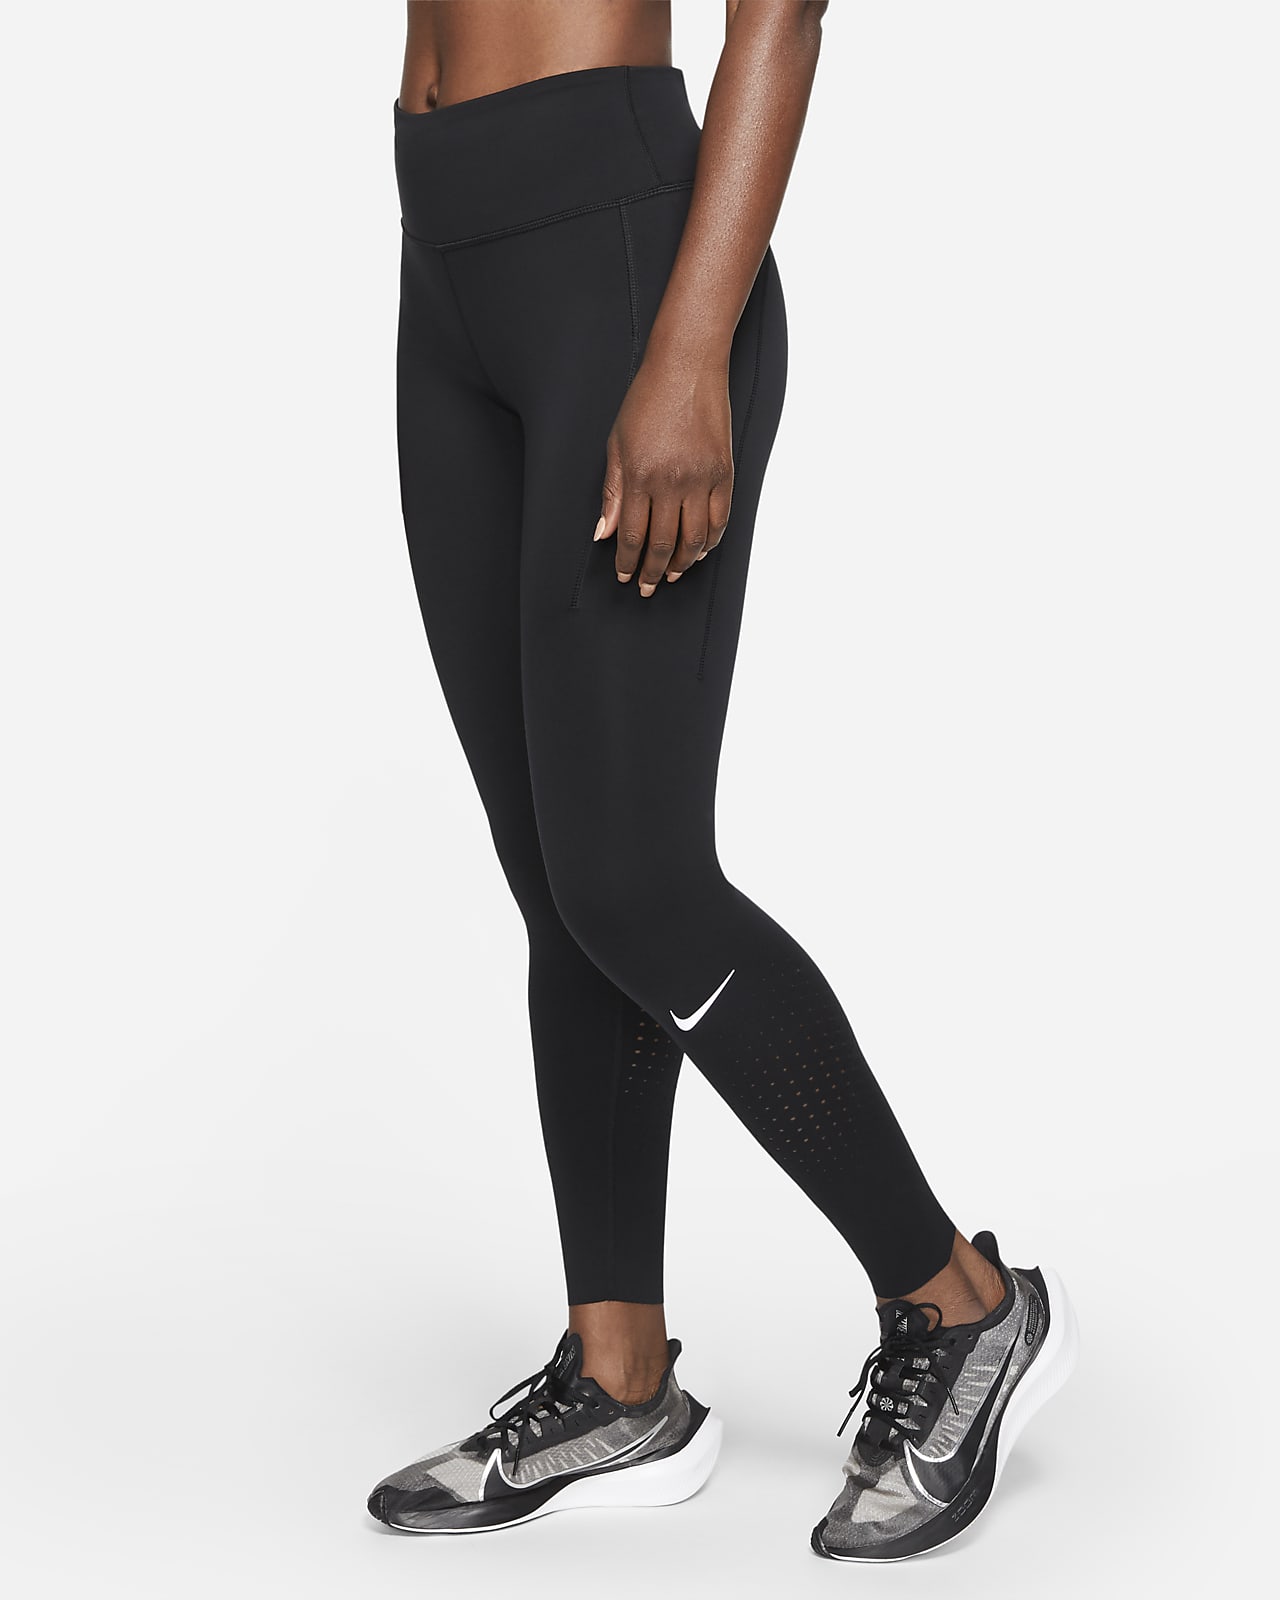 آمنة تصرف ركوب الأمواج  Nike Epic Luxe középmagas derekú, zsebes női leggings. Nike HU